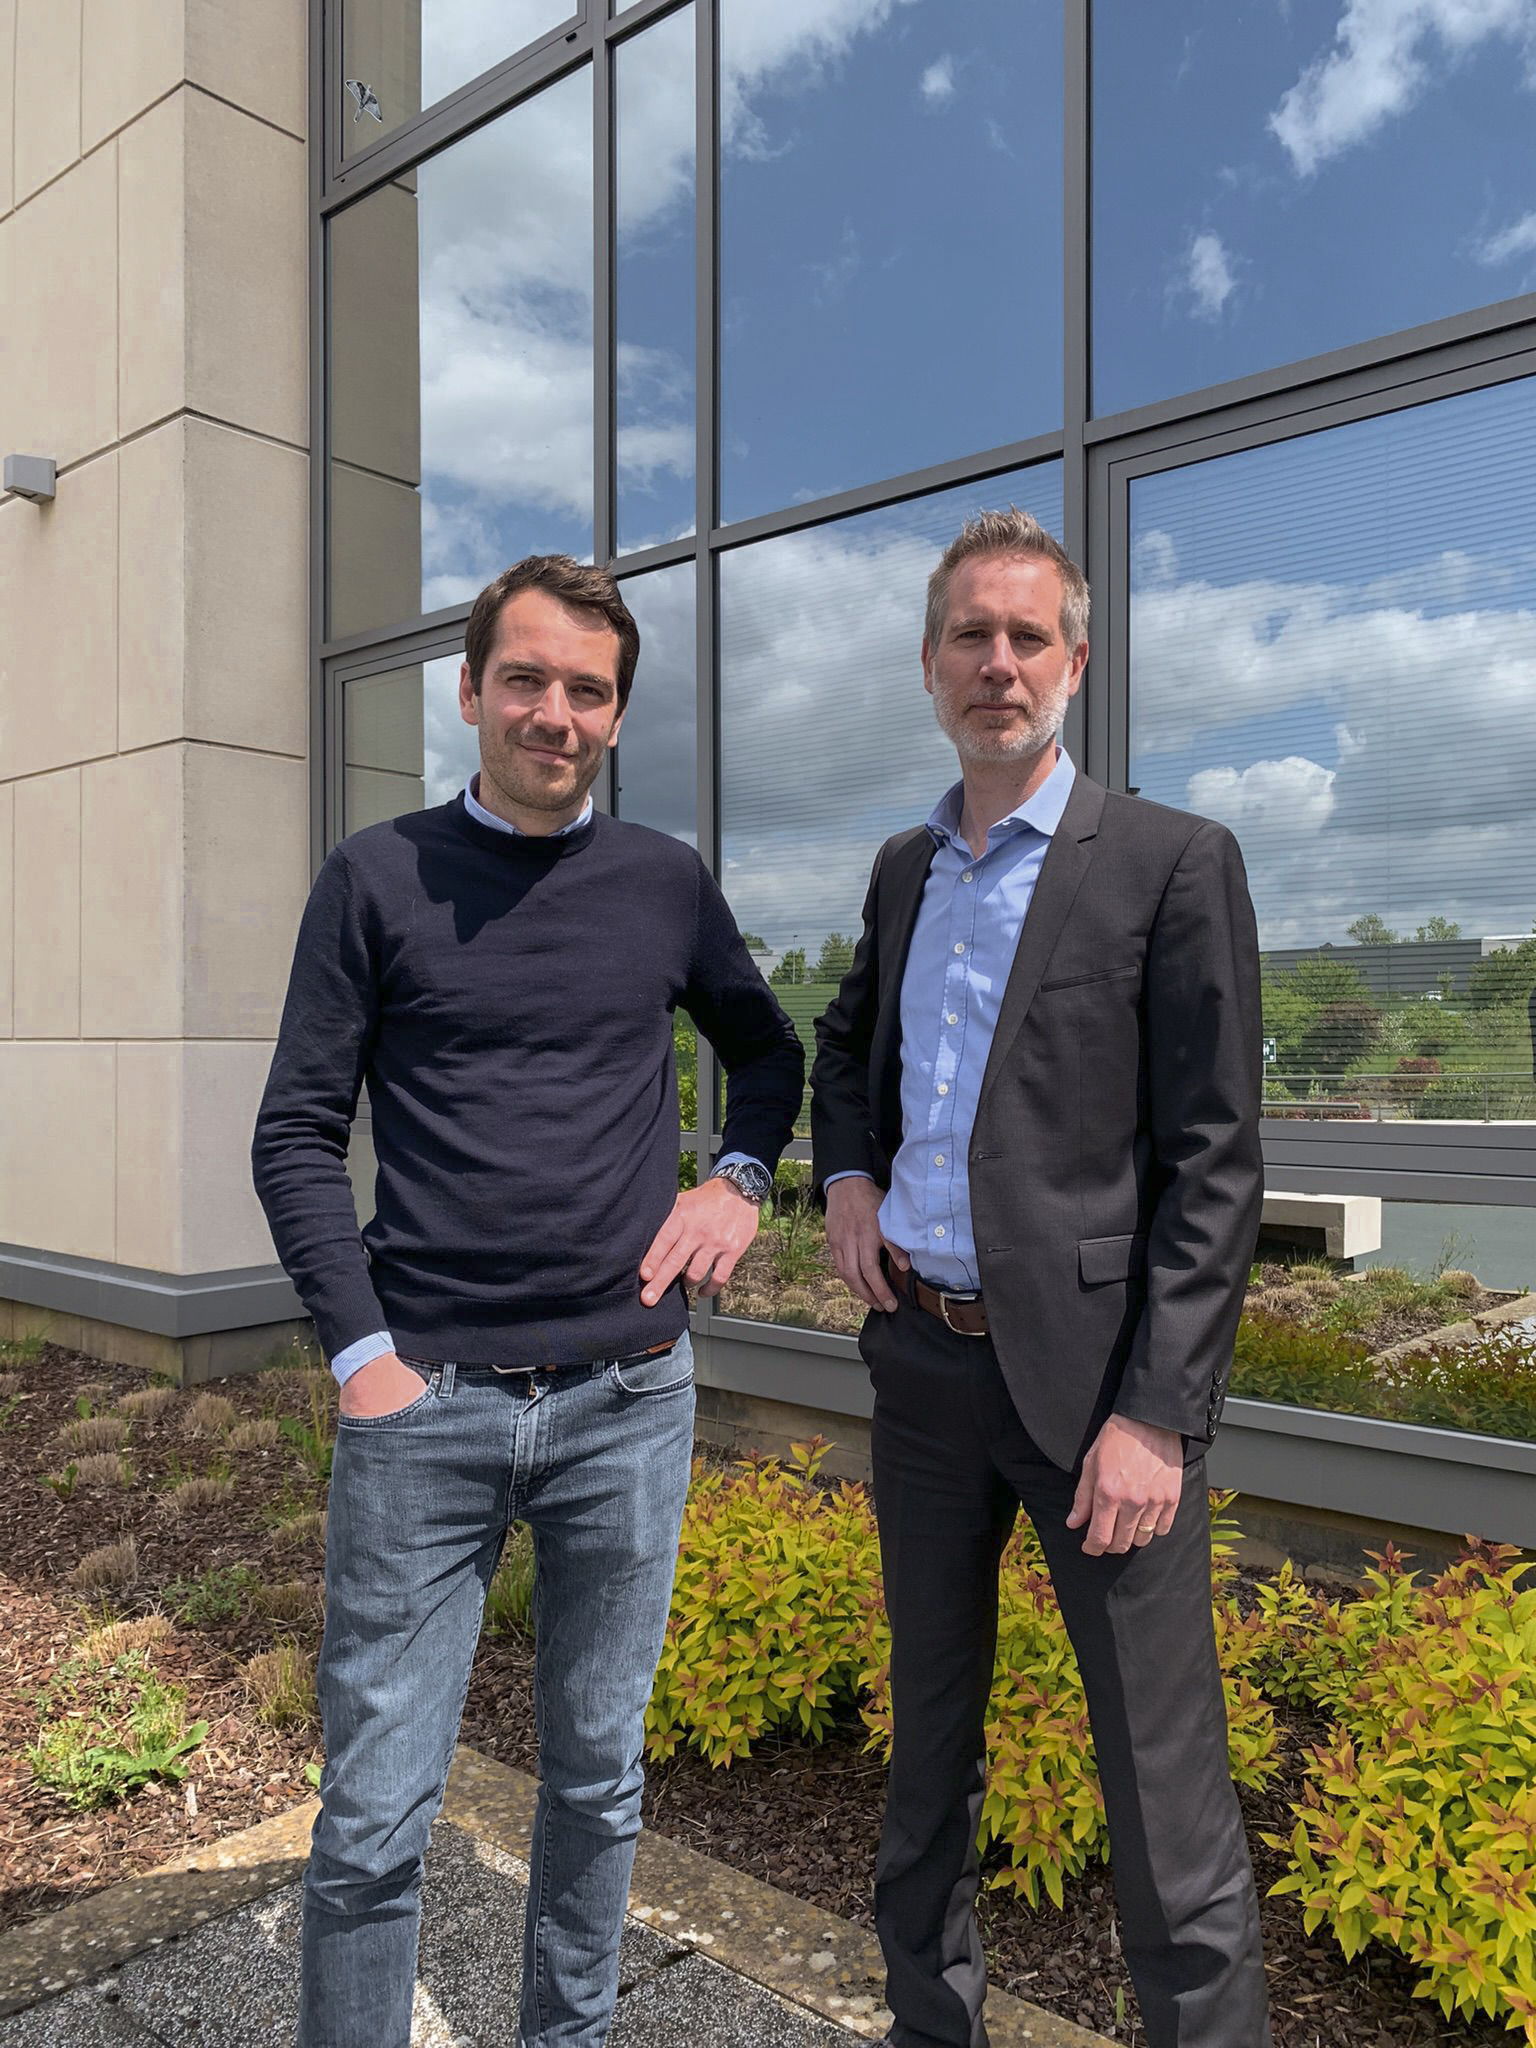 Sébastien Bruyr, Odoo's Chief Operating Officer,
and Julien Stocq, KPMG in Belgium's Odoo alliance lead